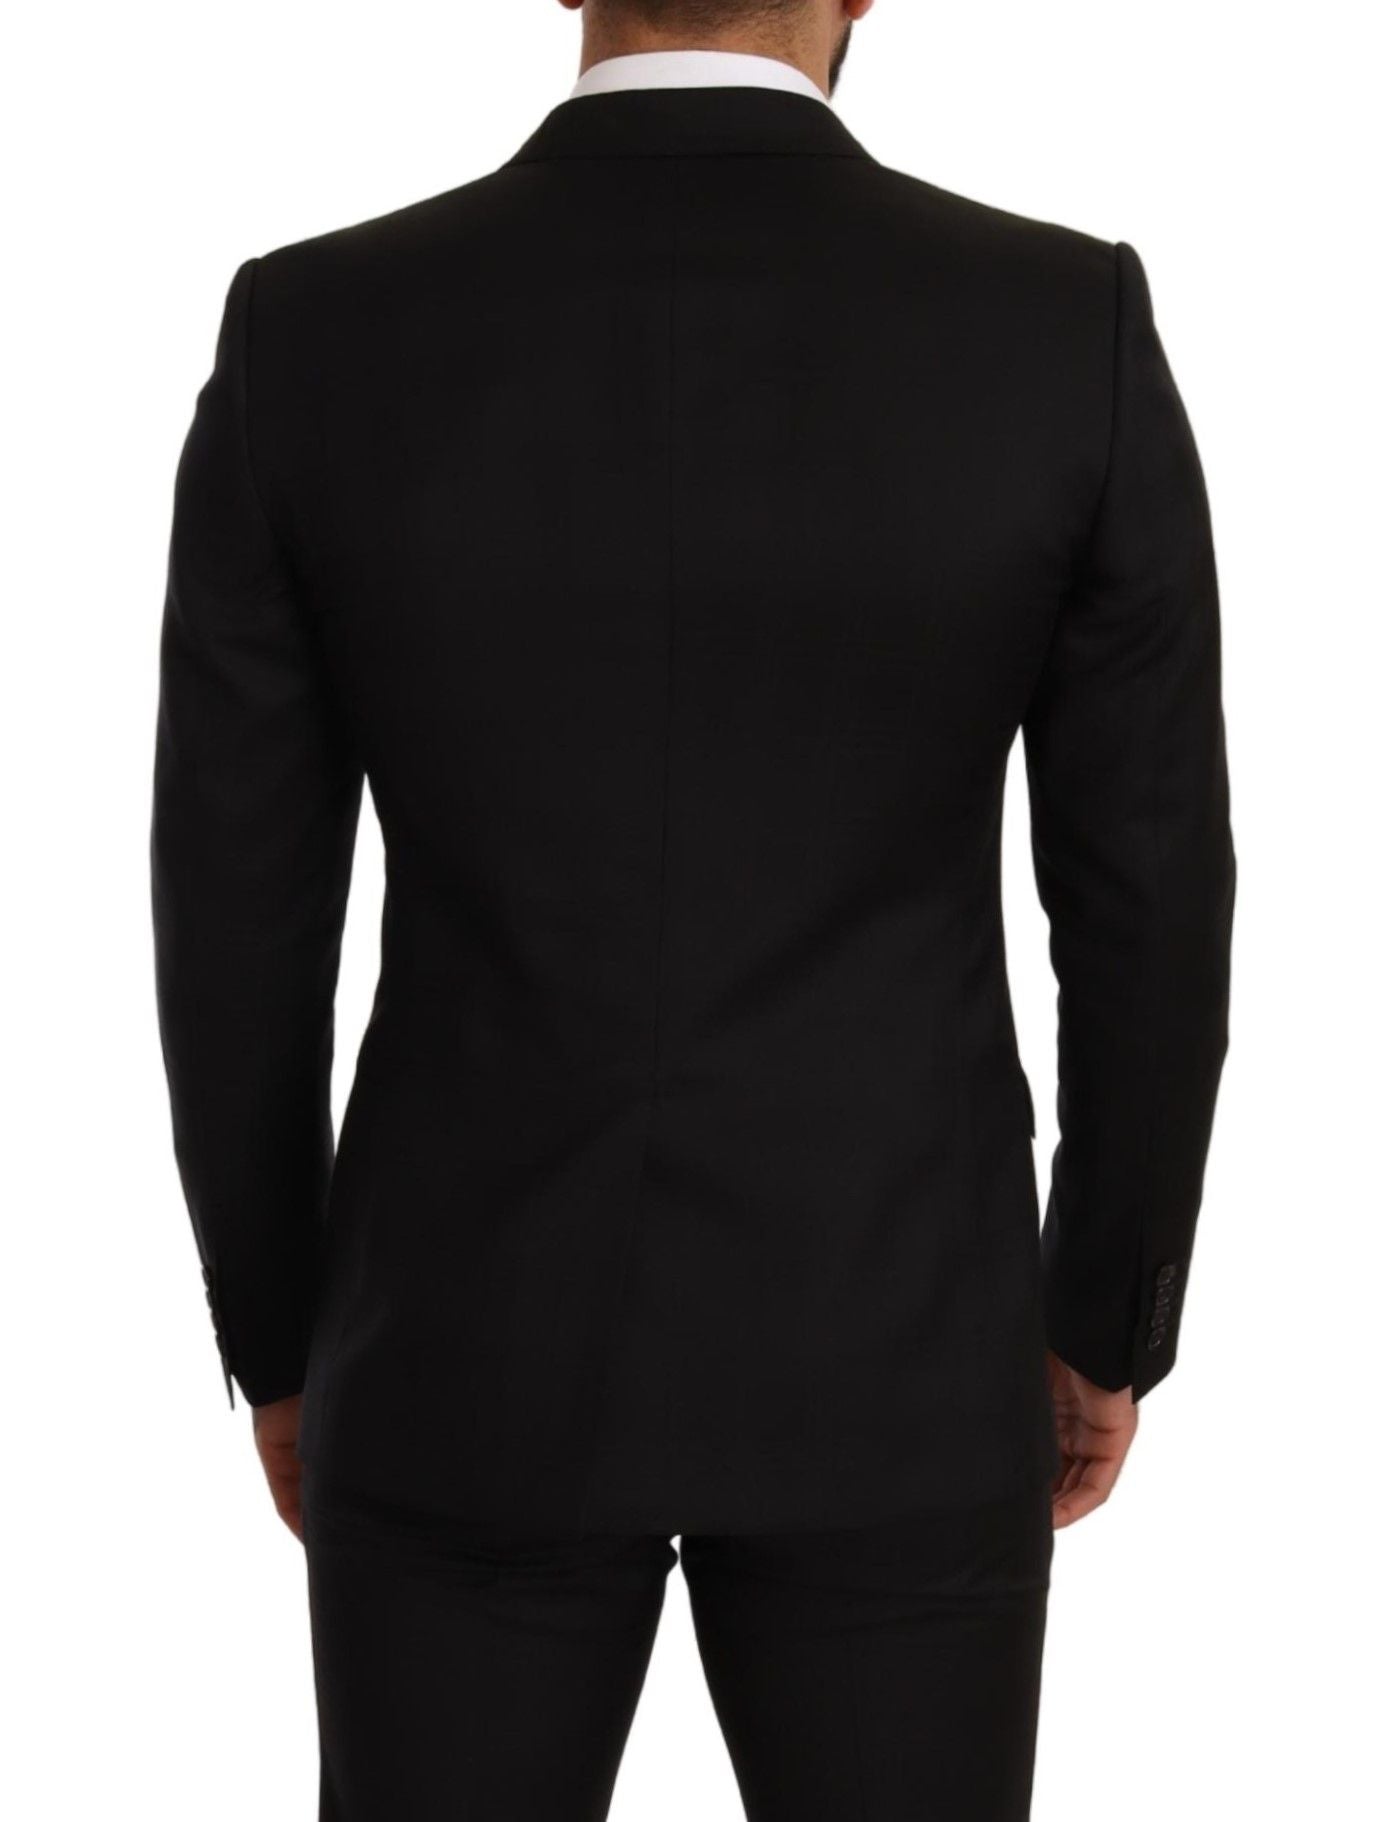 Black Check MARTINI SLIM FIT 2 Piece Suit